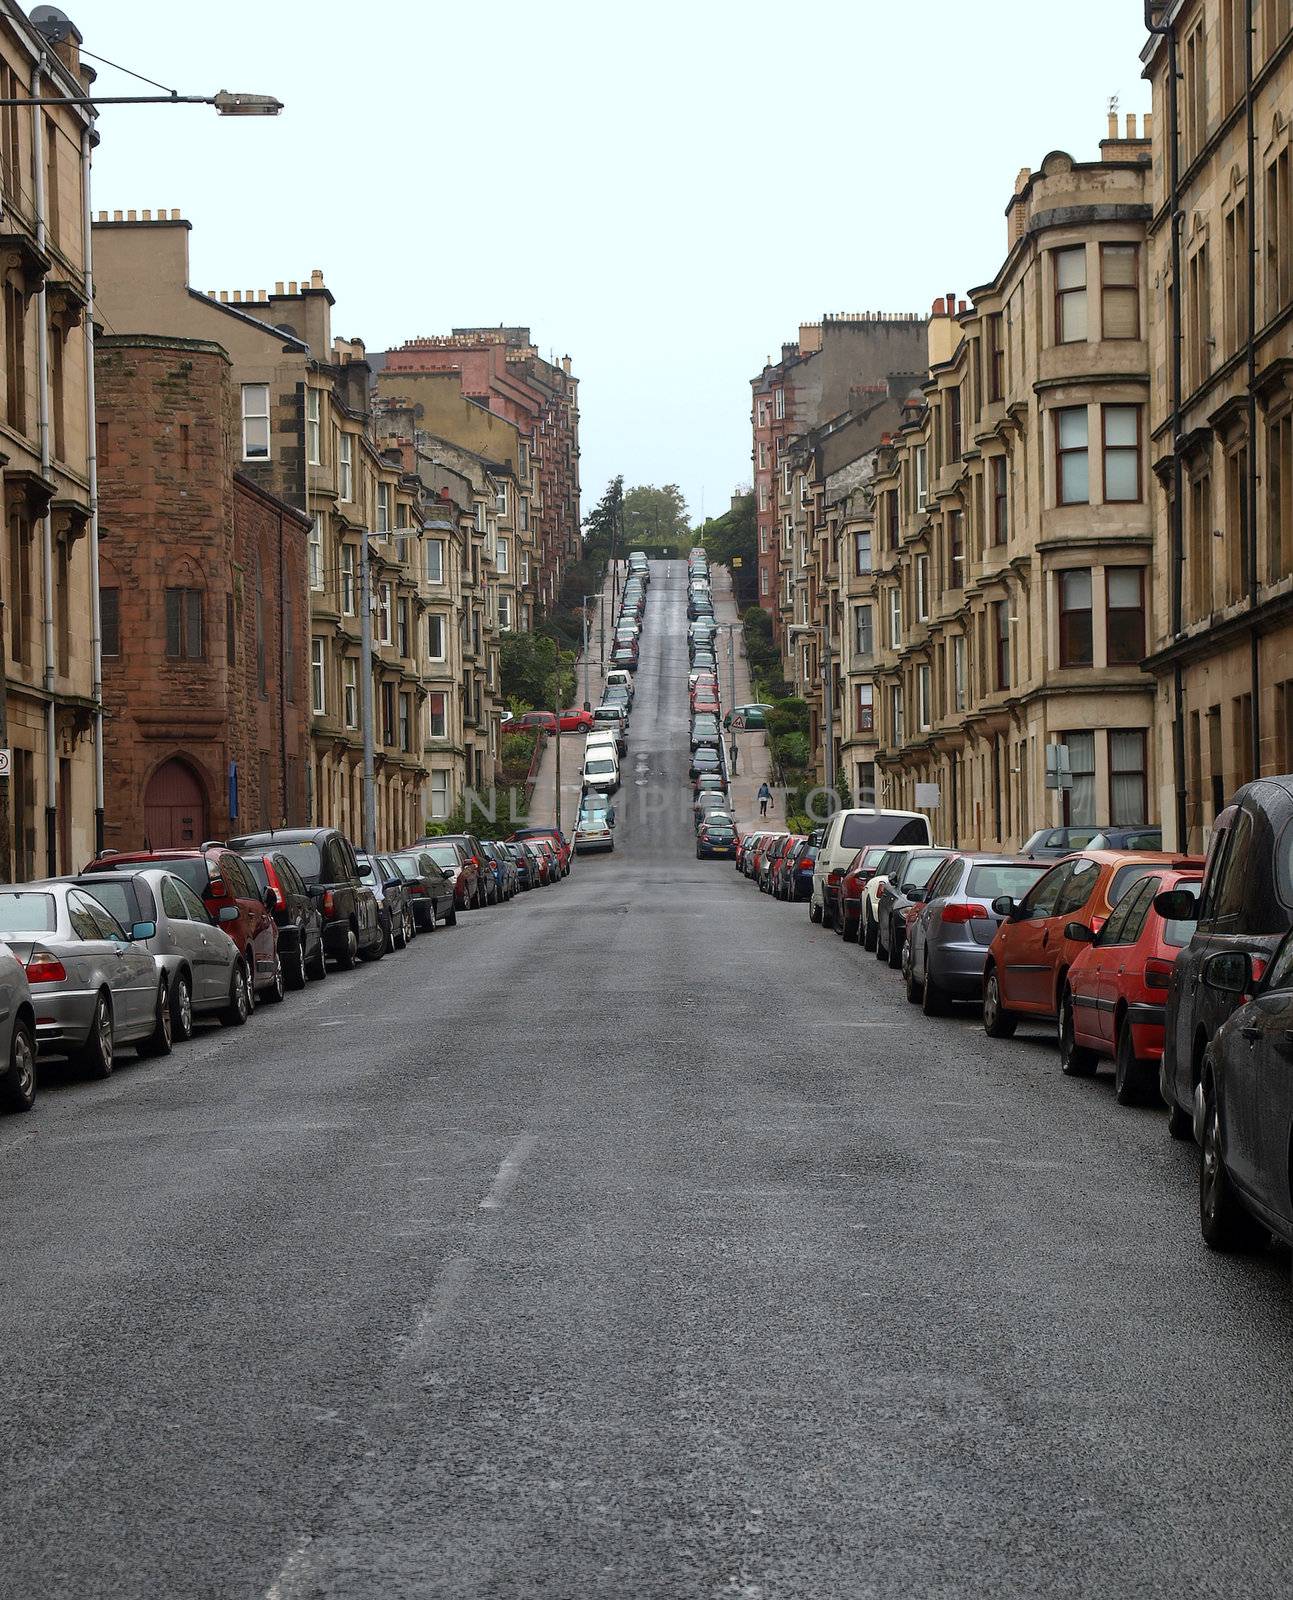 Gardner Street, the steepest road on Glasgow hills